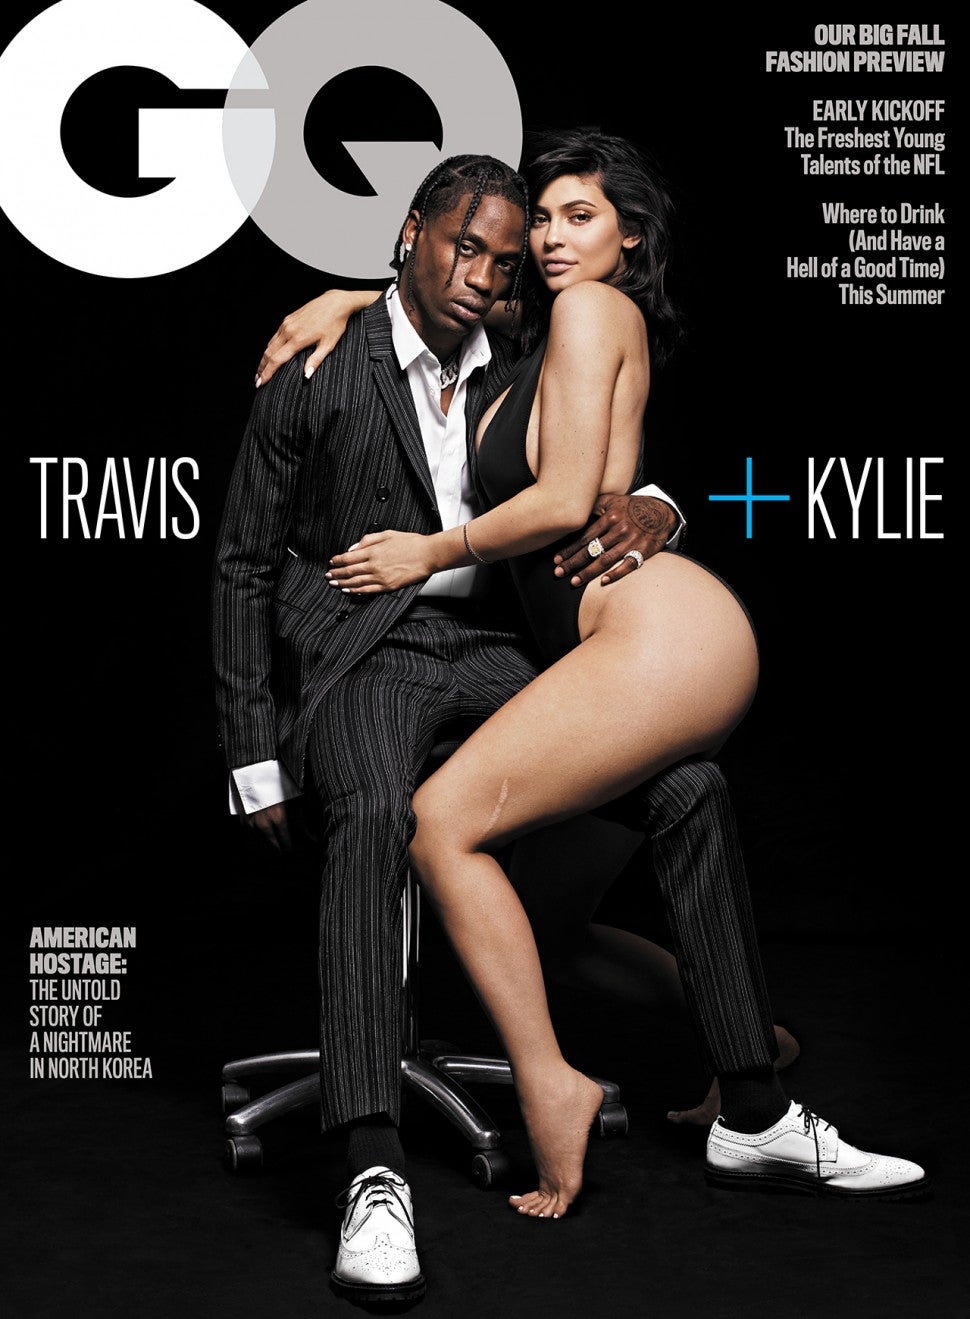 Travis Scott and Kylie Jenner